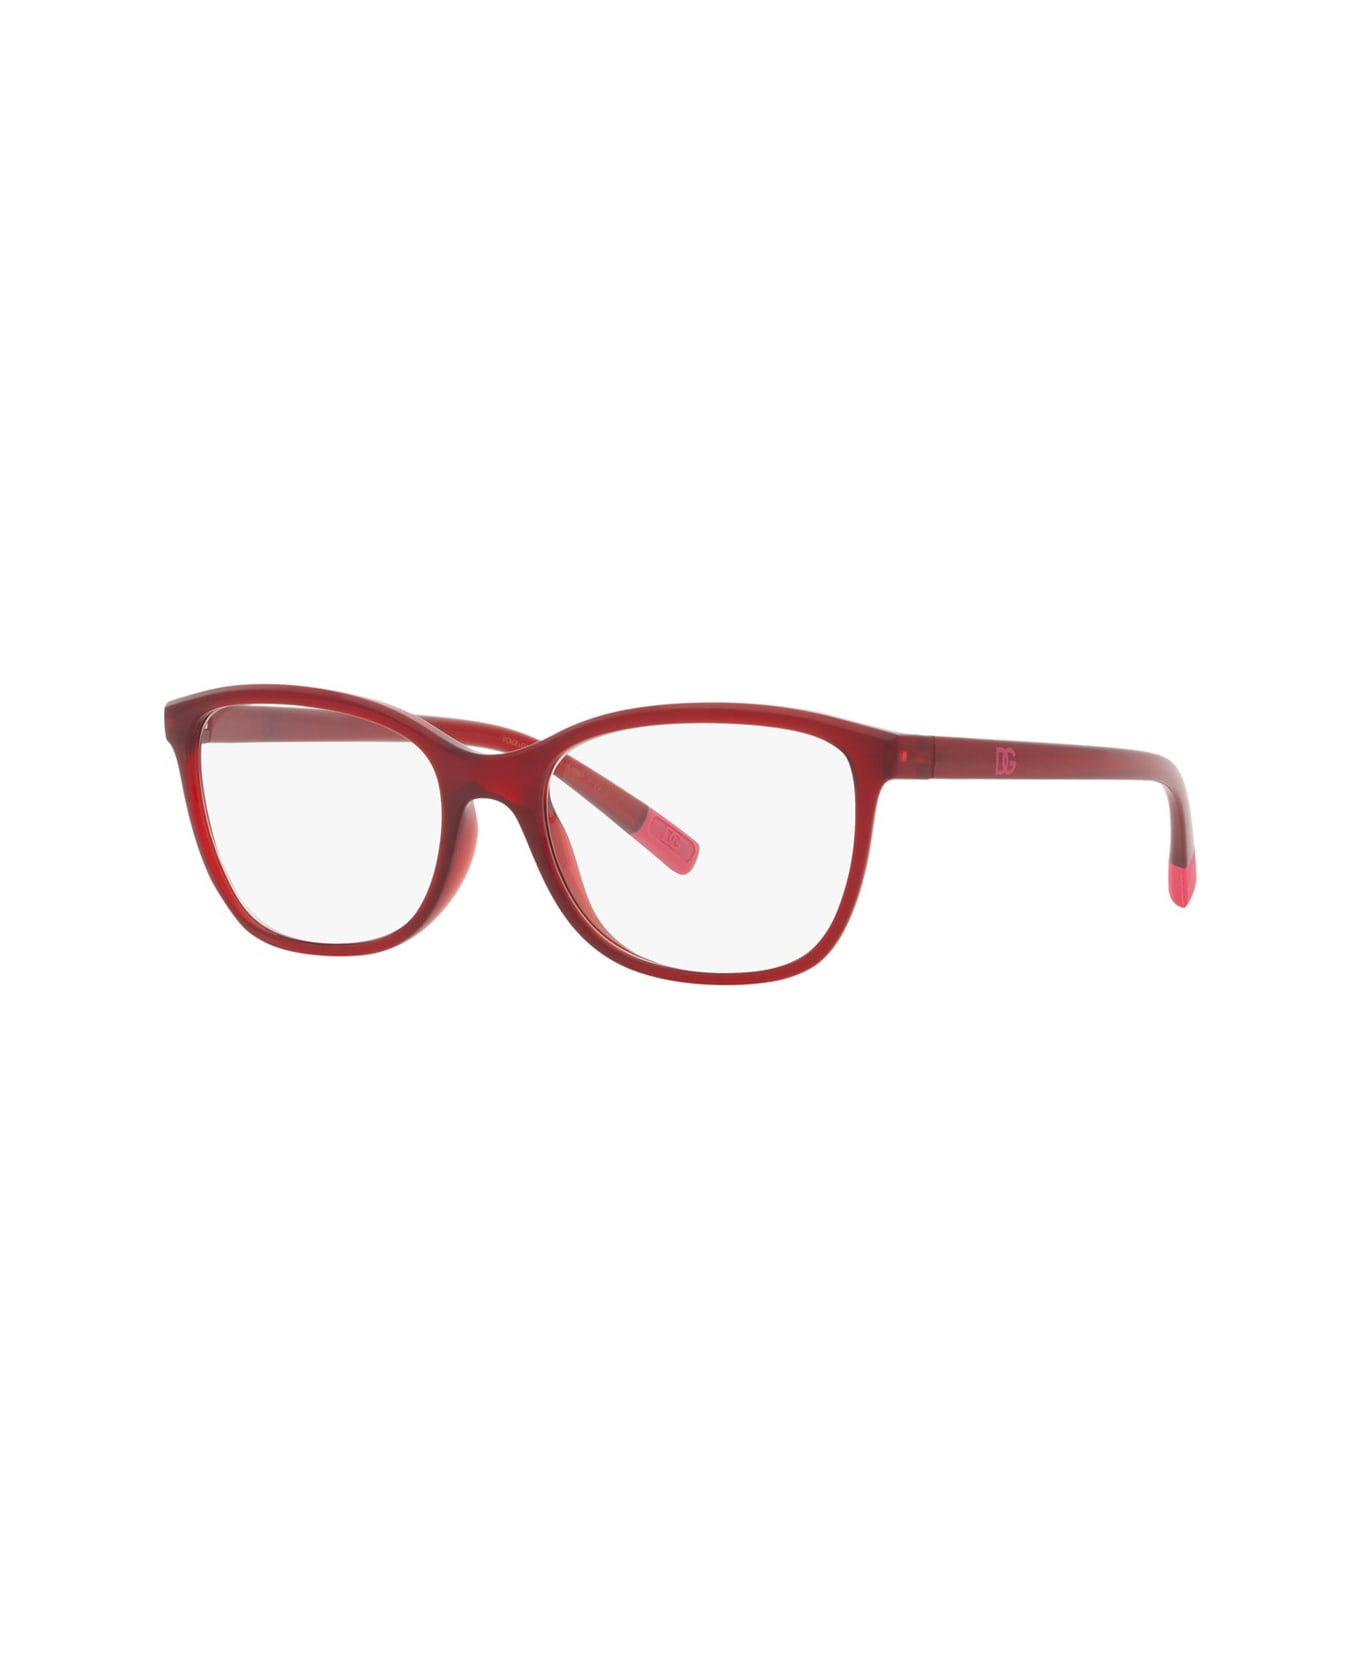 Sustentável trimmed Dolce & gabbana Light Blue Intense 100ml Eyewear Dg5092 1551 Glasses - Rosso